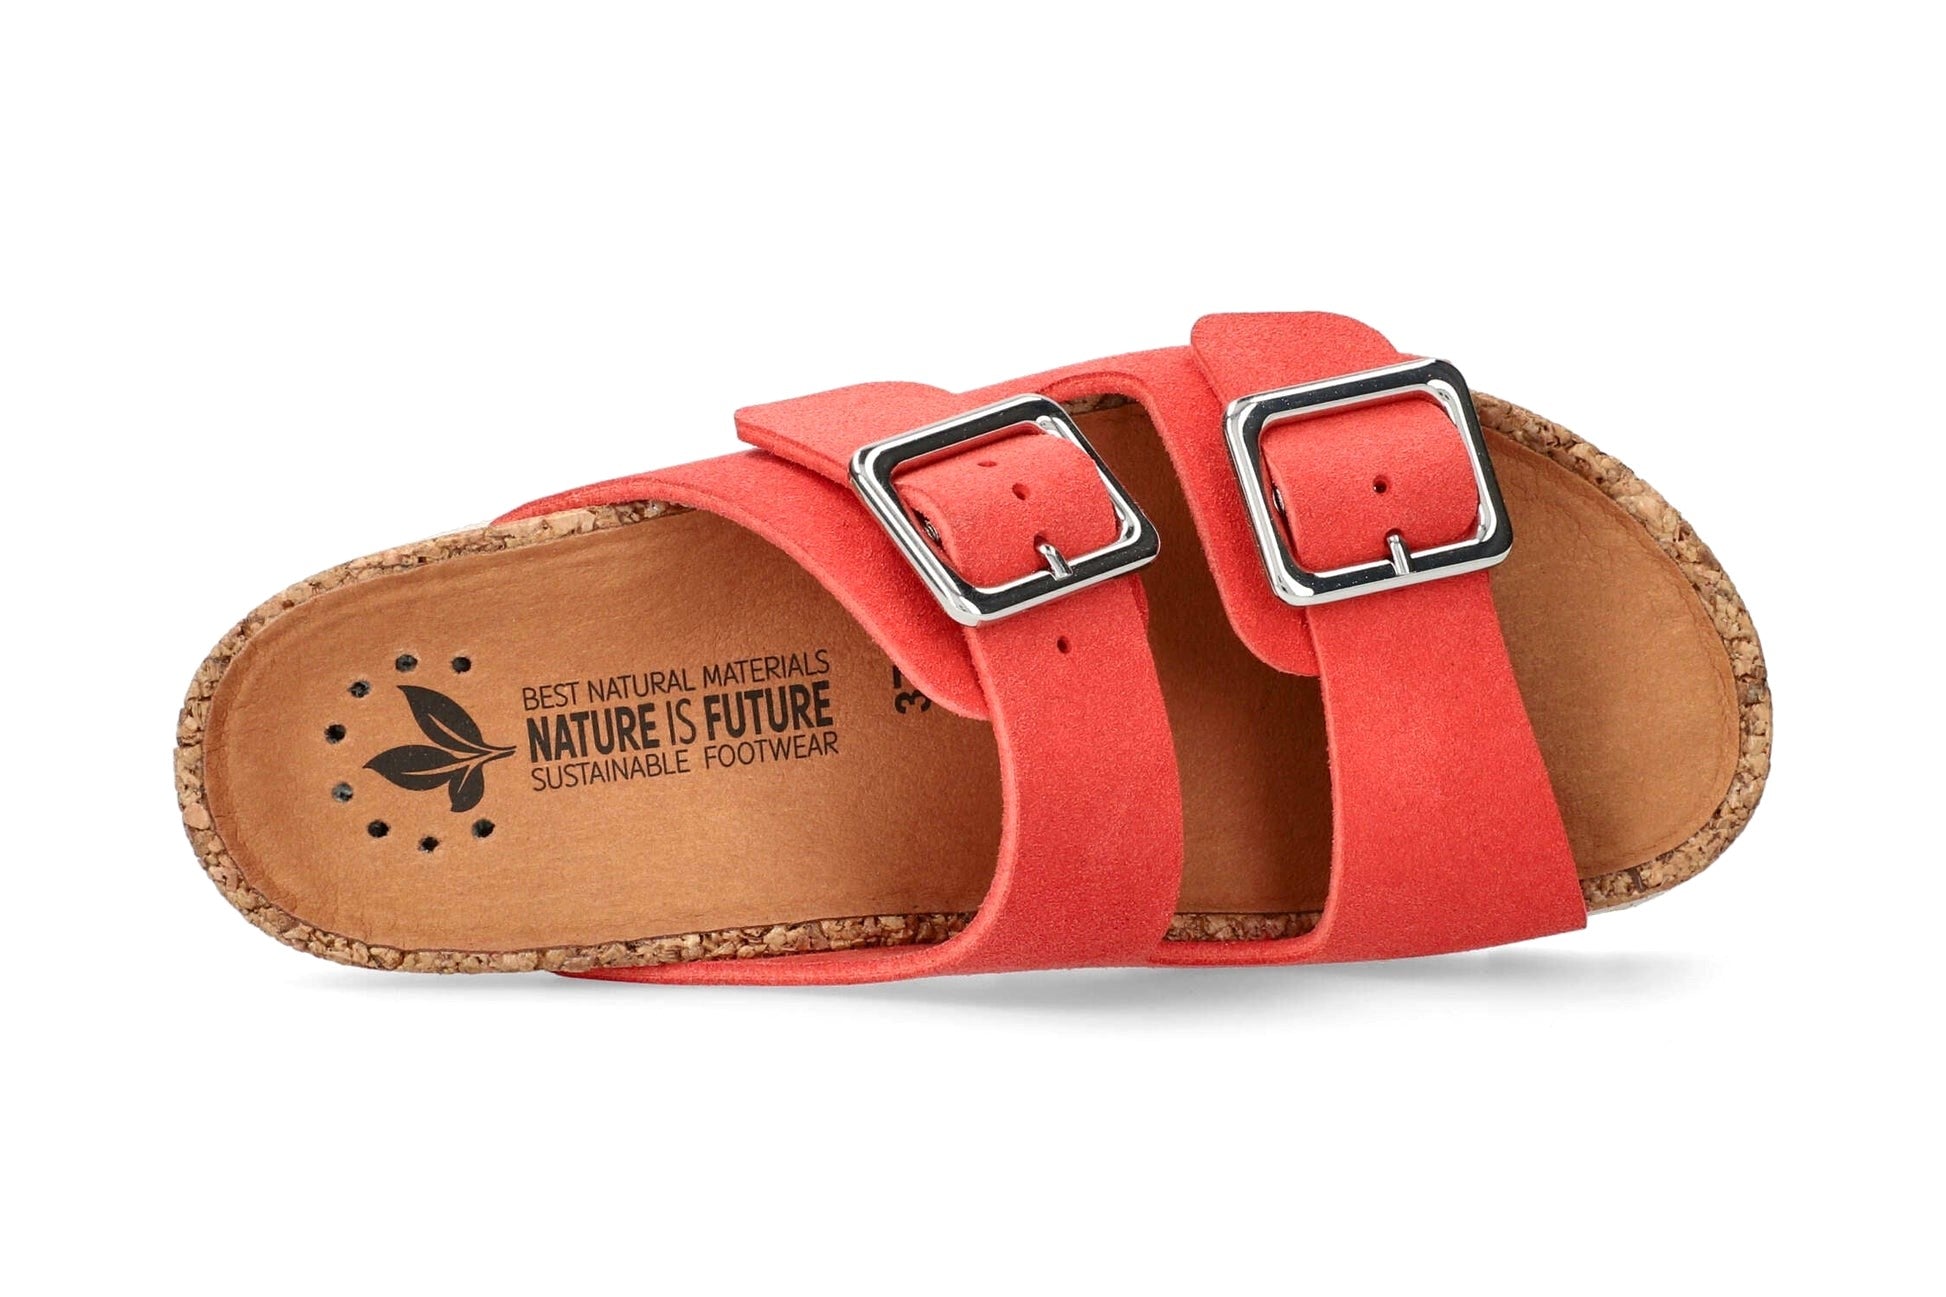 'Maelia' women's sandal - red - Chaplinshoes'Maelia' women's sandal - redMephisto